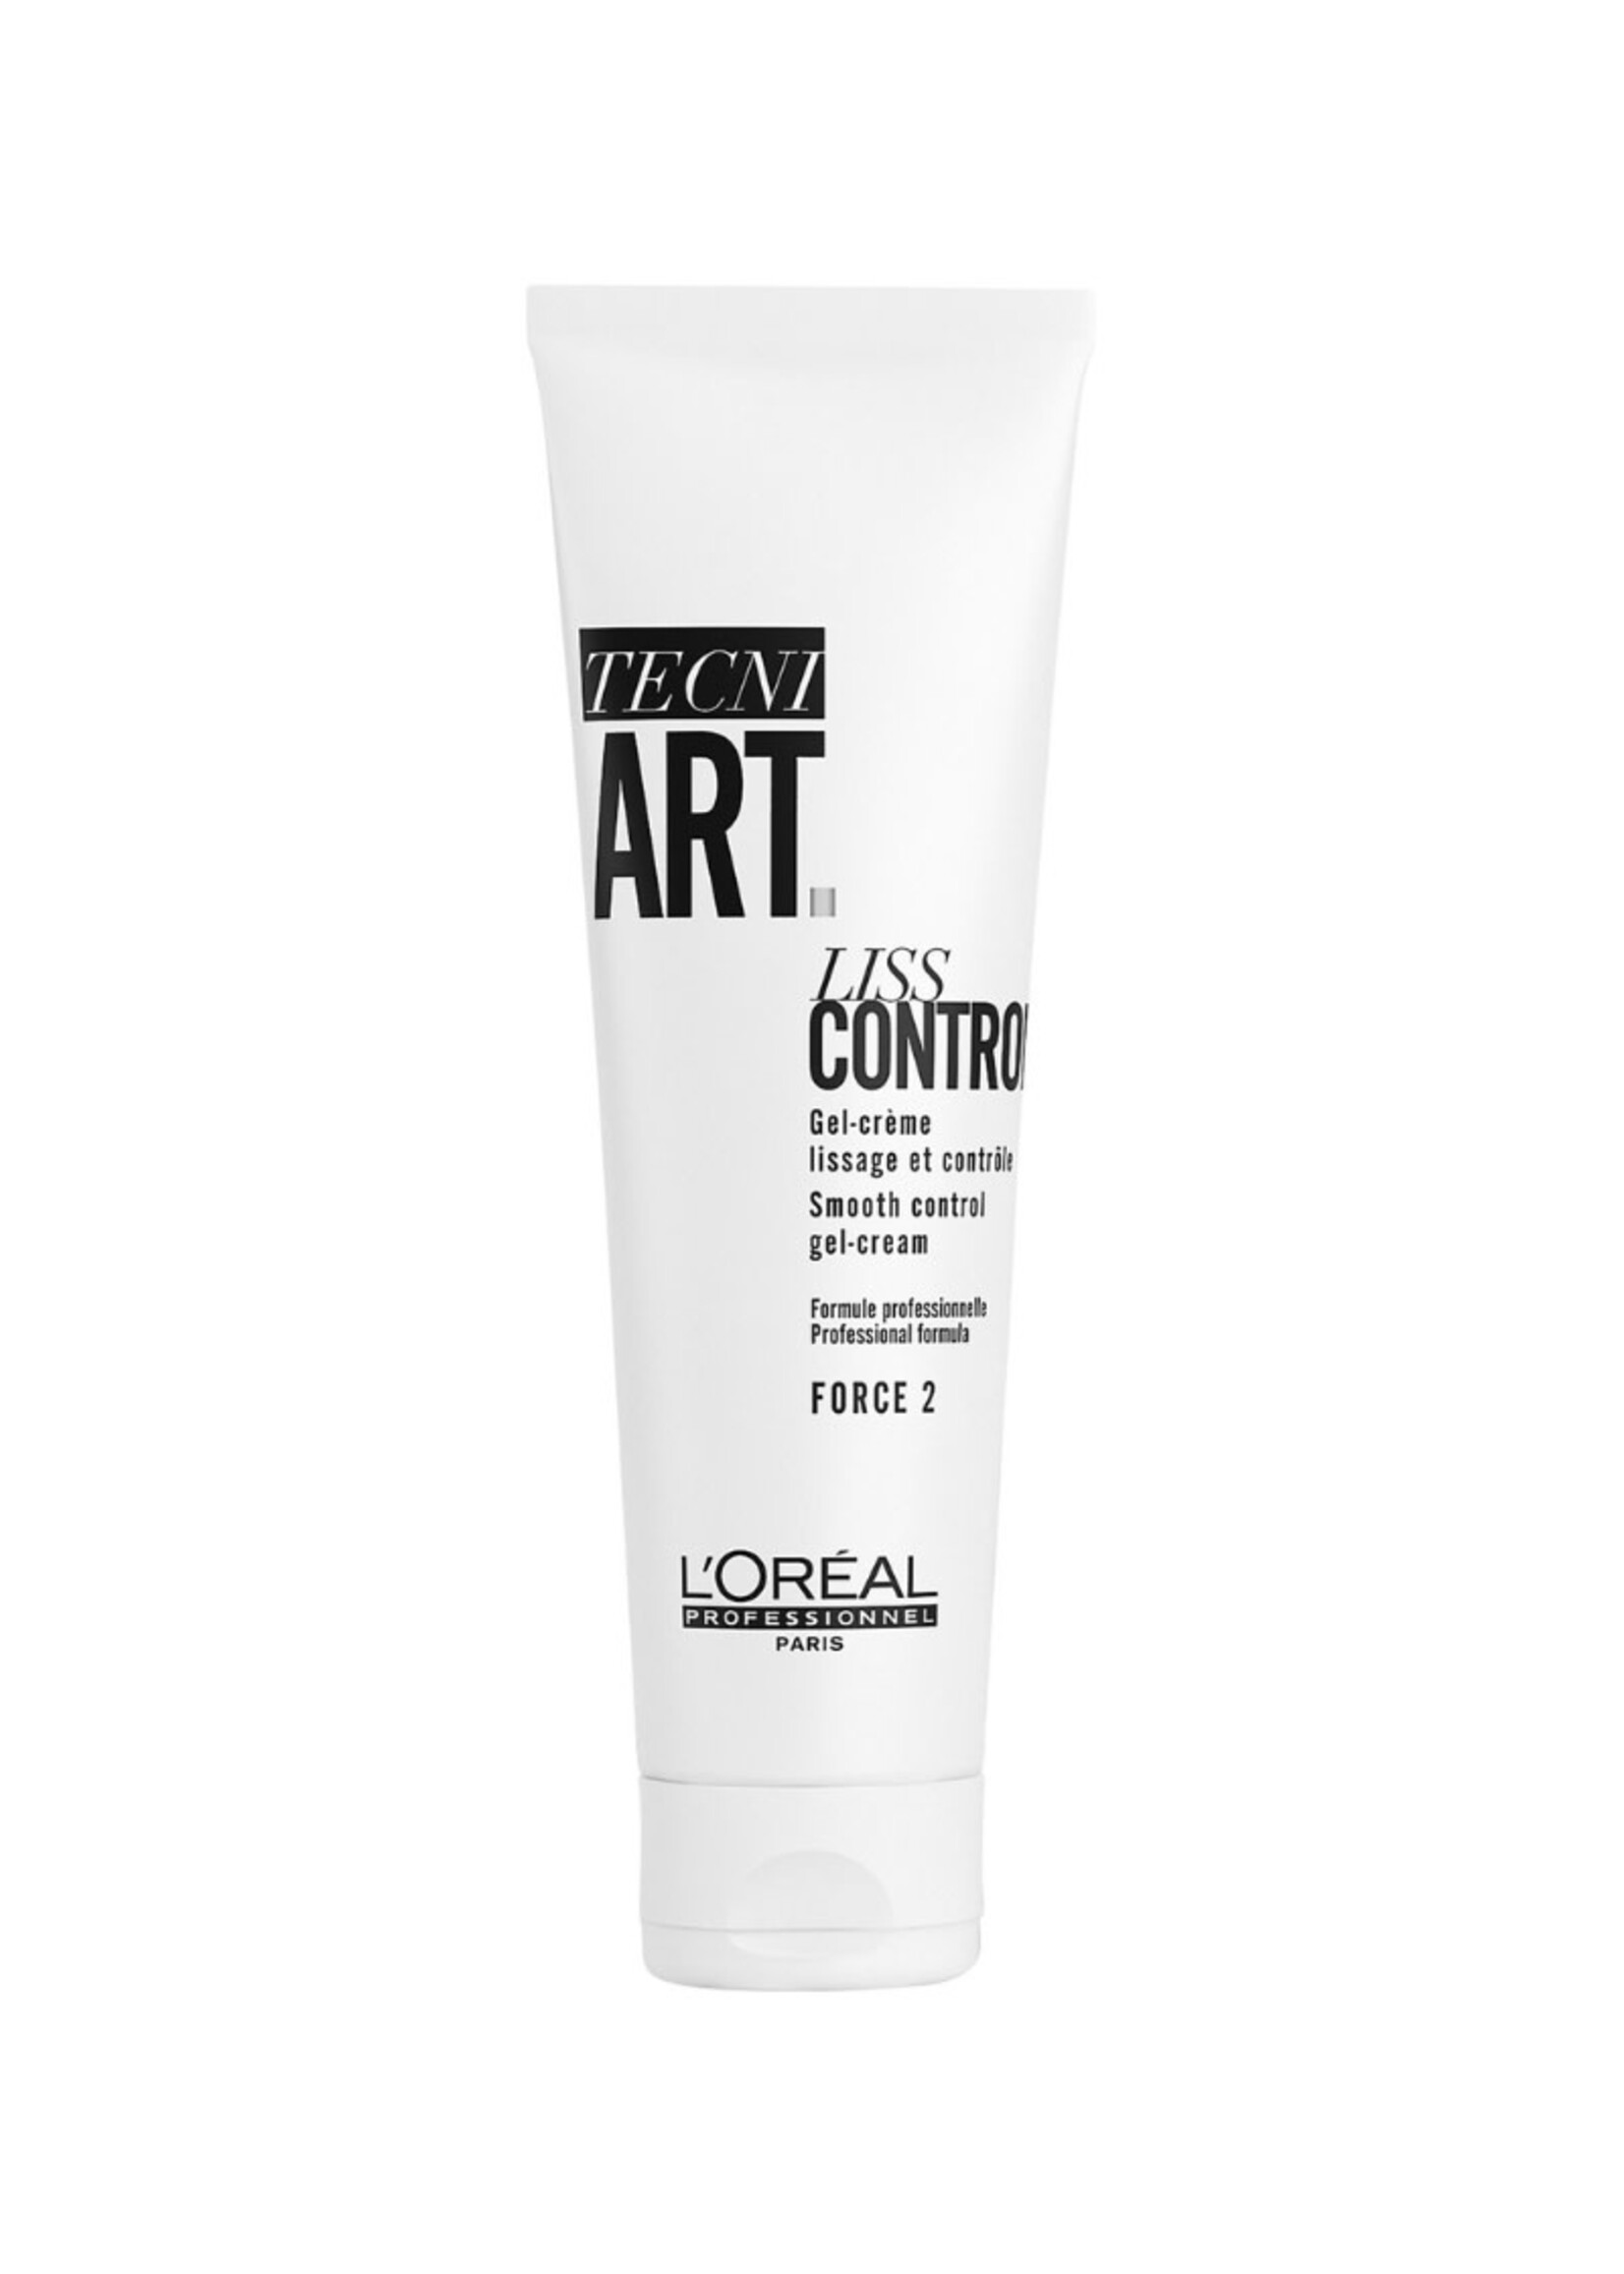 Loreal Professional Loreal Tecni.ART Liss Control 150ml